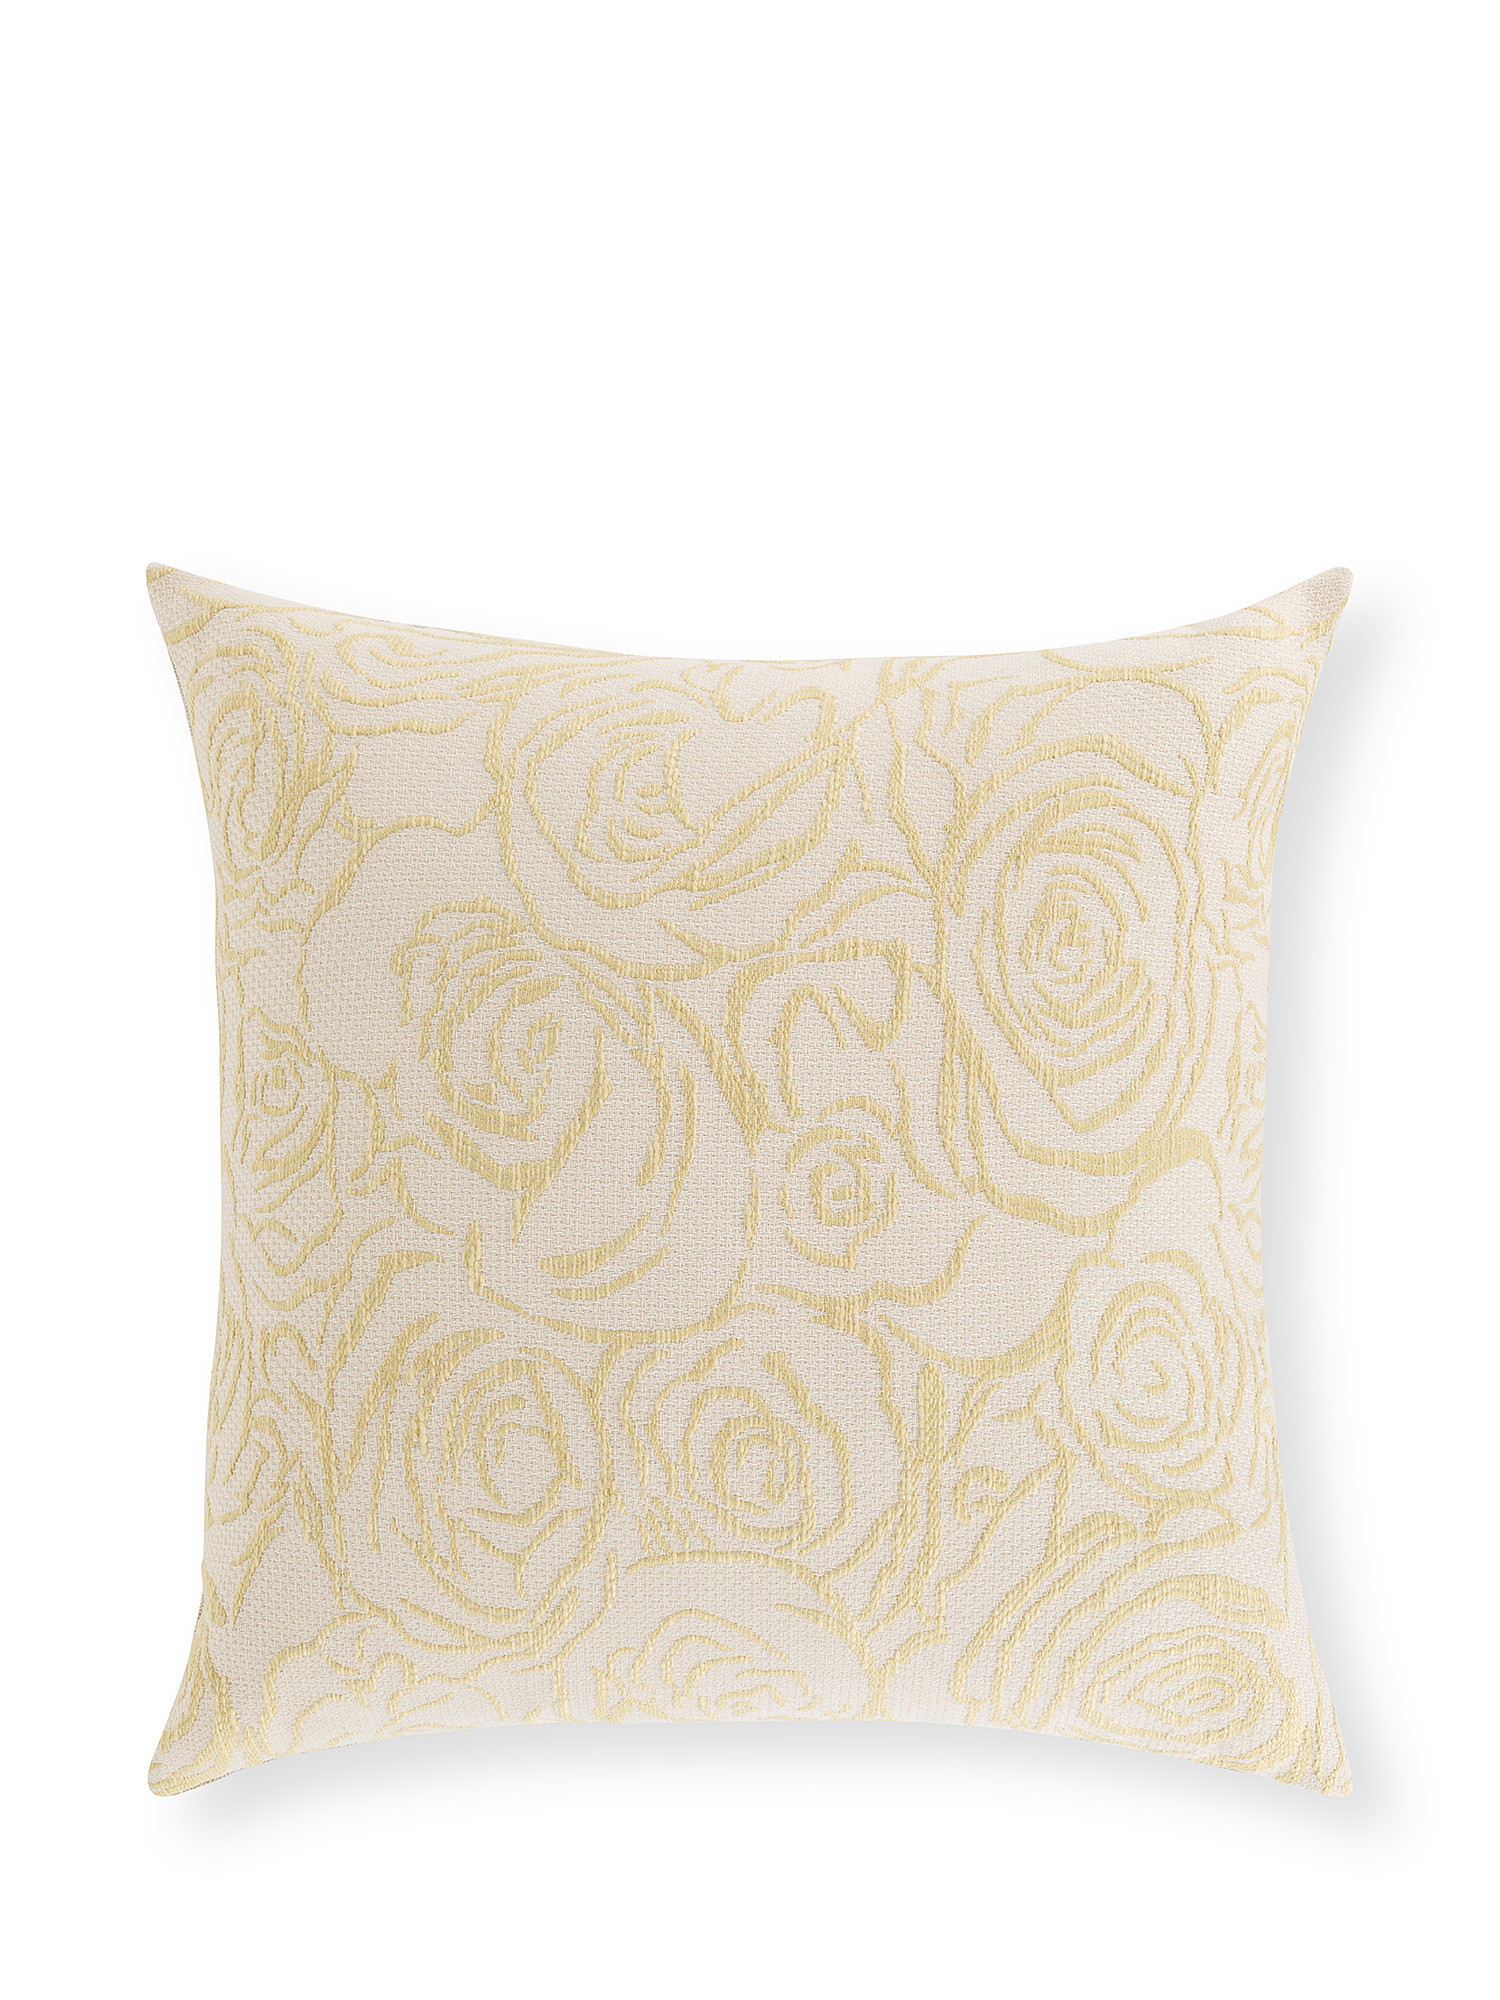 Cotton jacquard cushion with rose motif 45x45cm, Beige, large image number 0